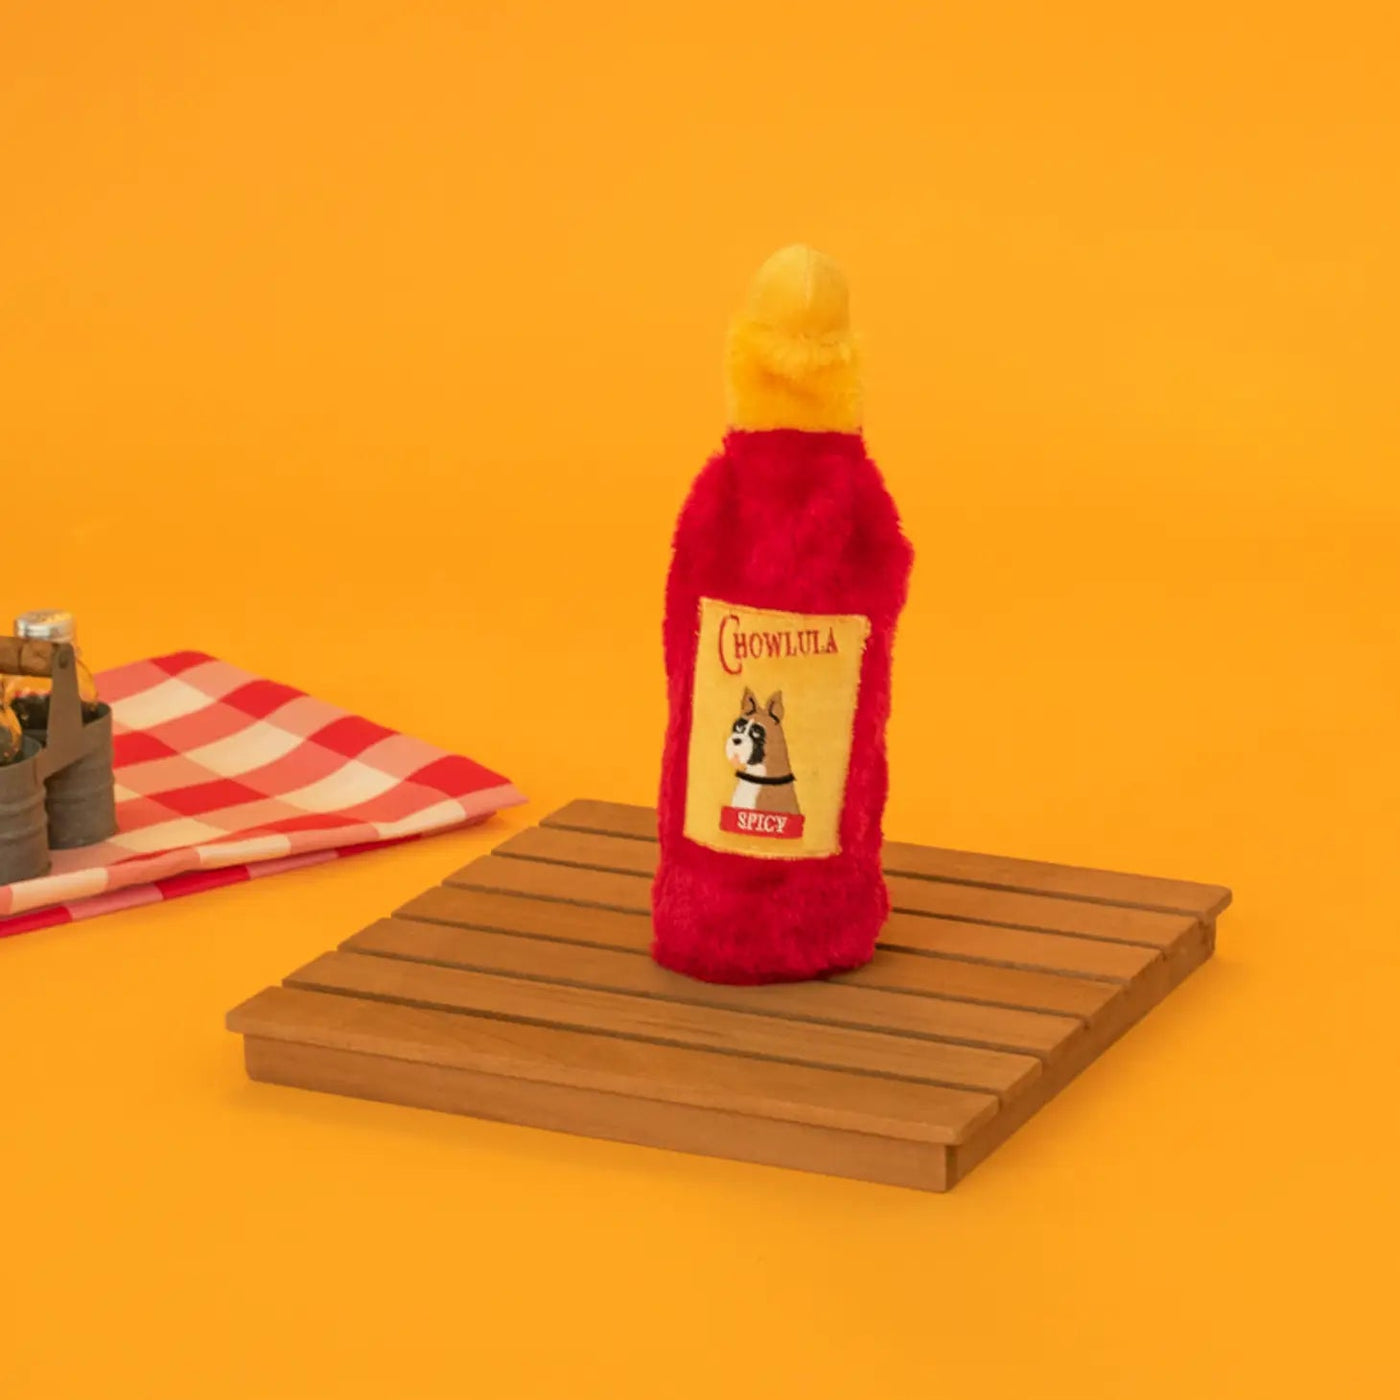 Hot Sauce Crusherz - Chowlula-Toy-Dizzy Dog Collars